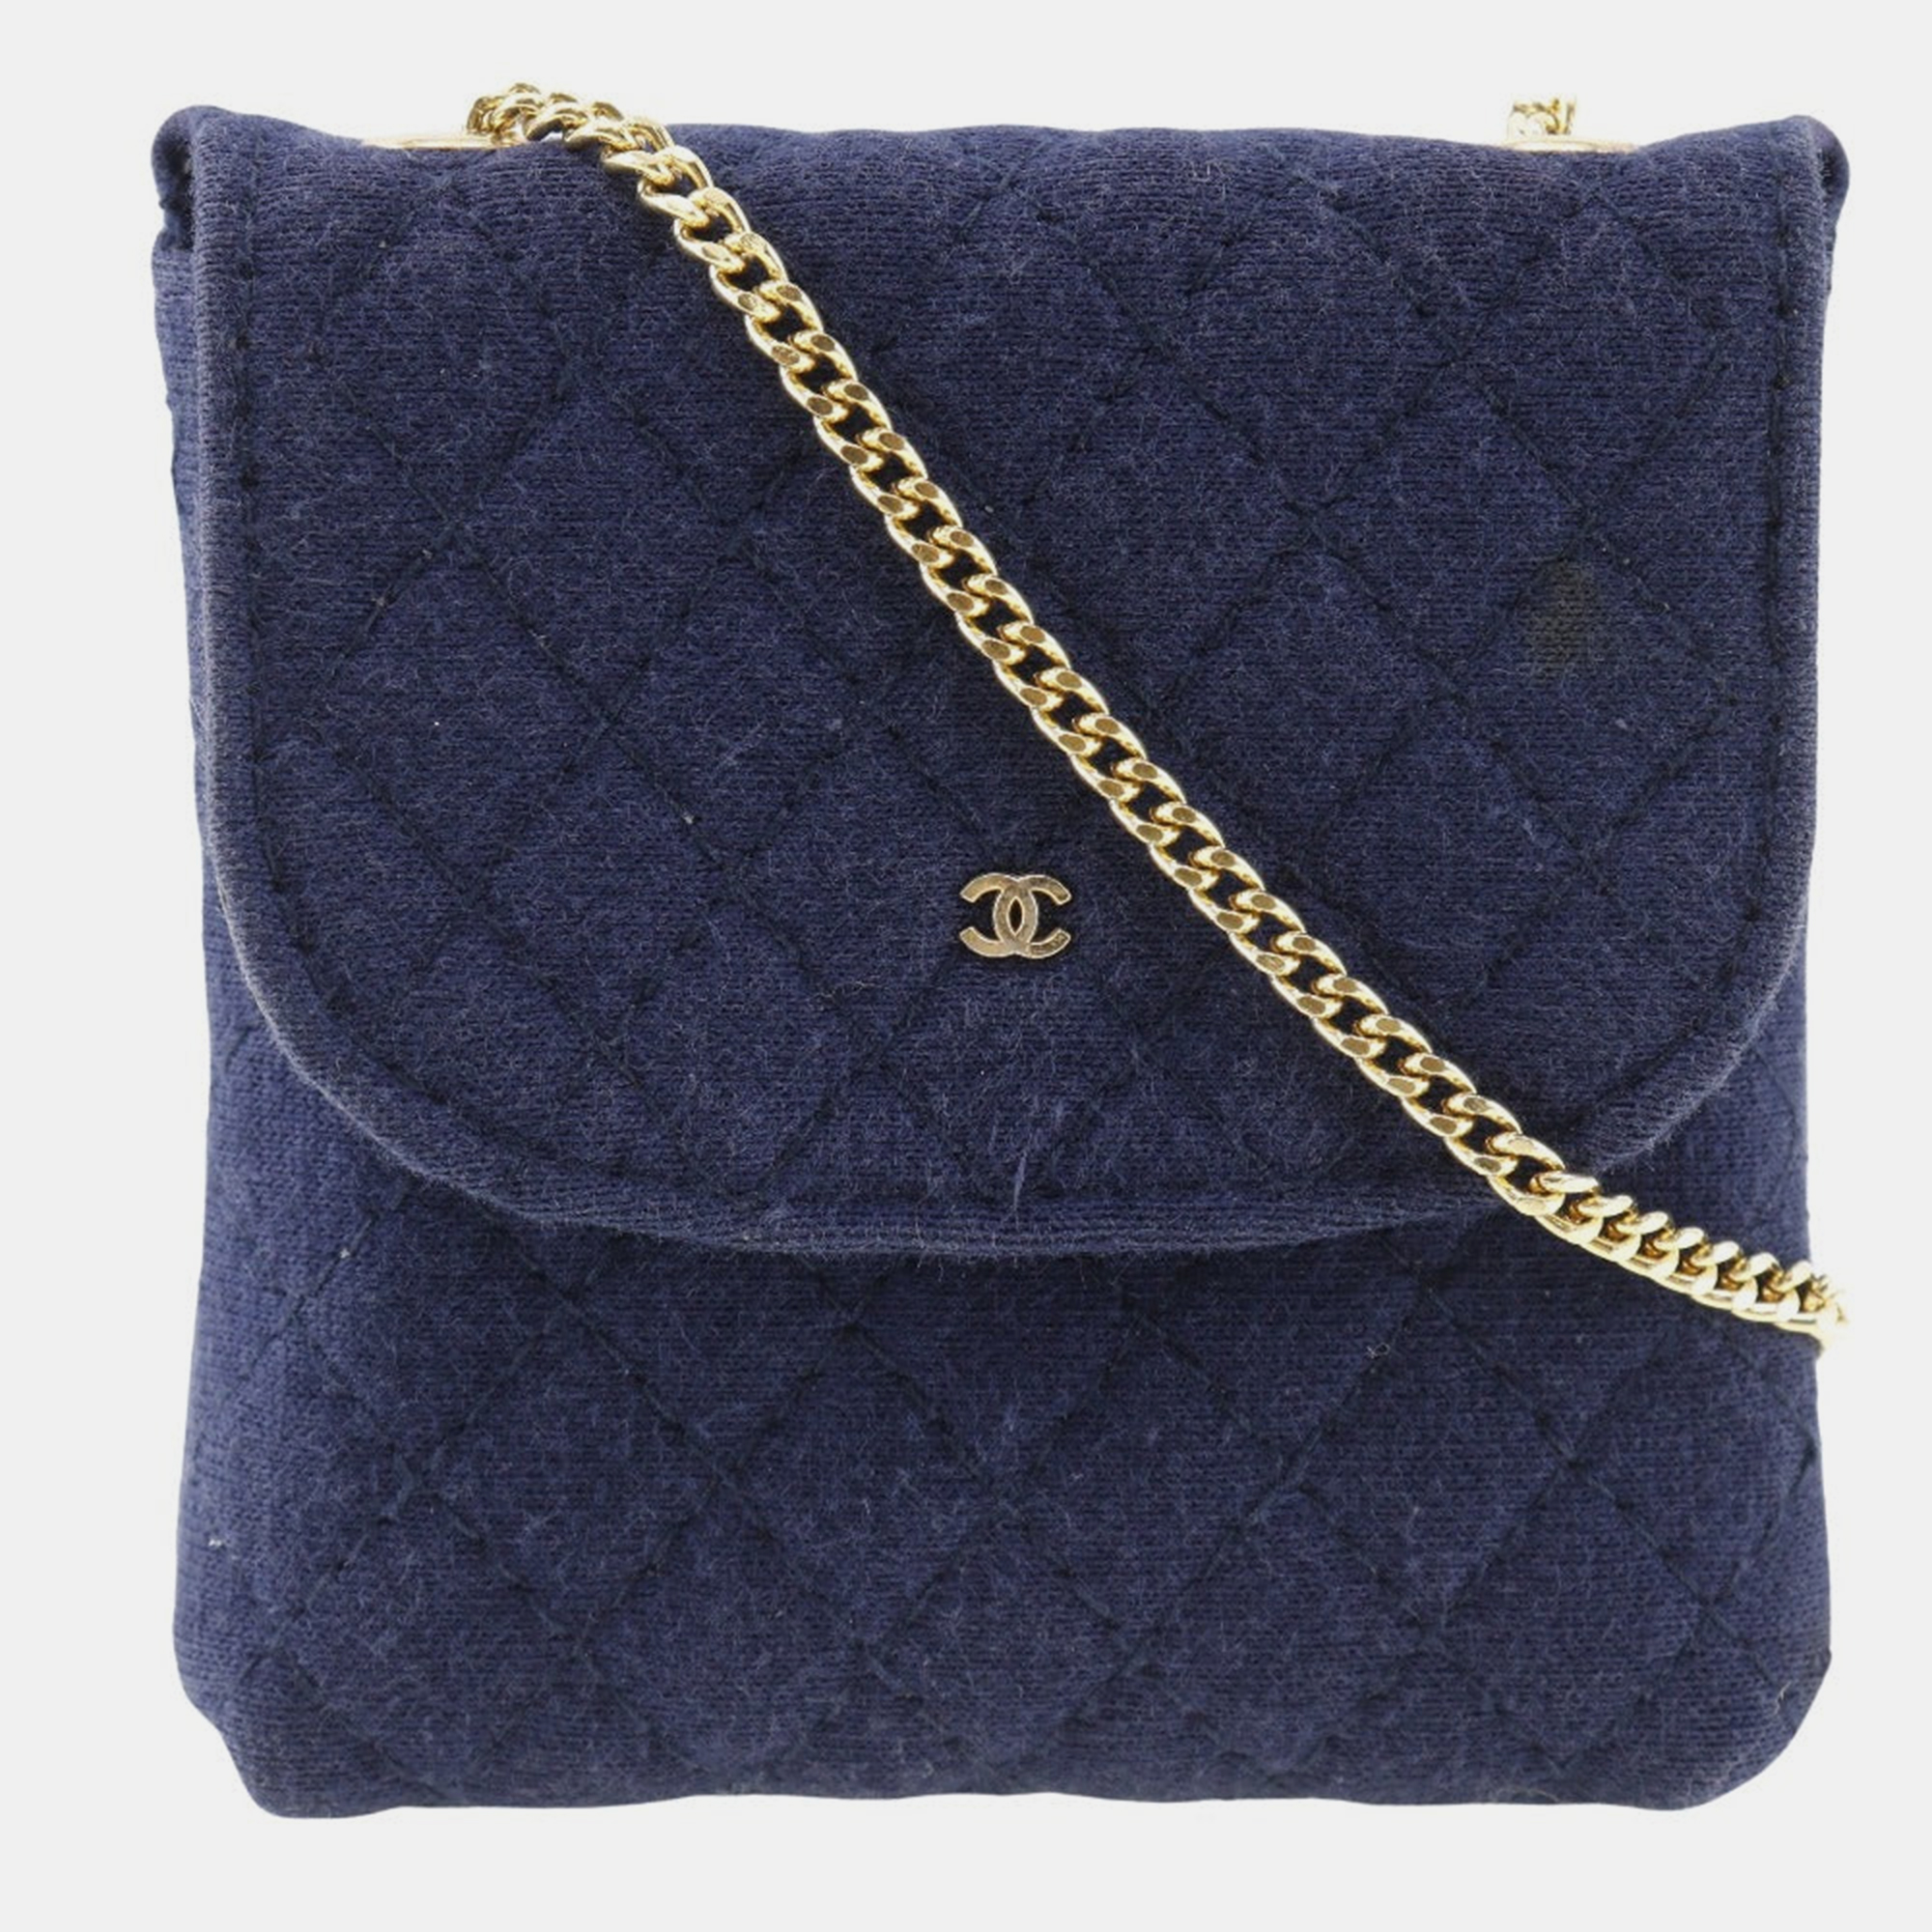 Chanel navy blue cotton chain shoulder bag